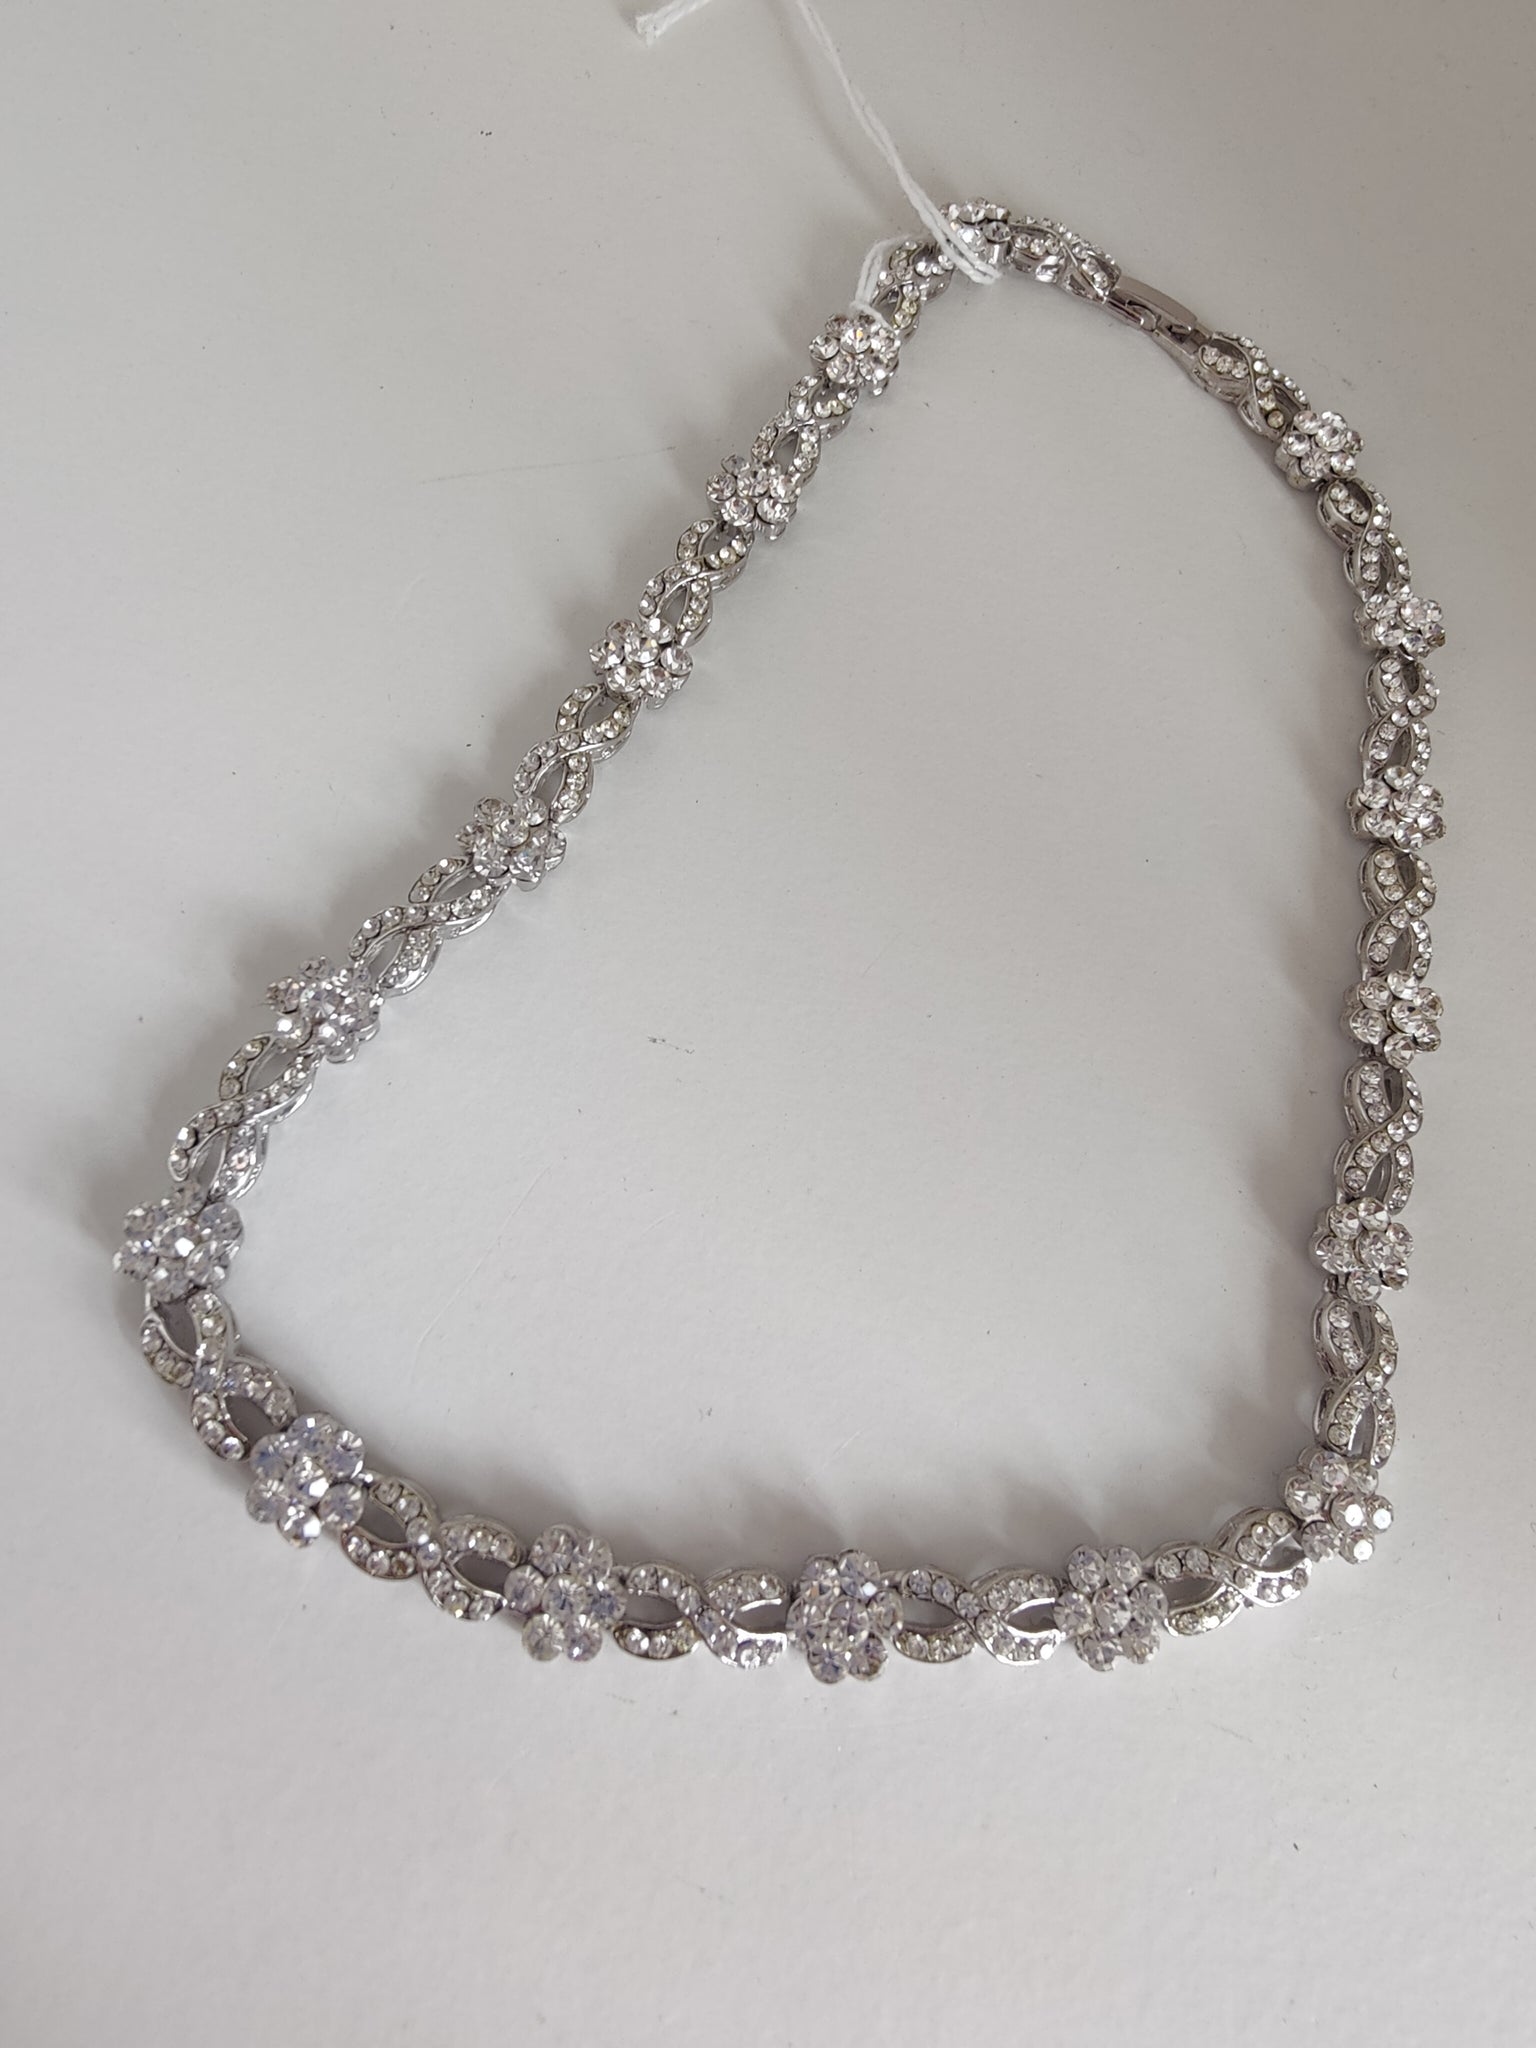 Vintage Rhinestone Collar Necklace